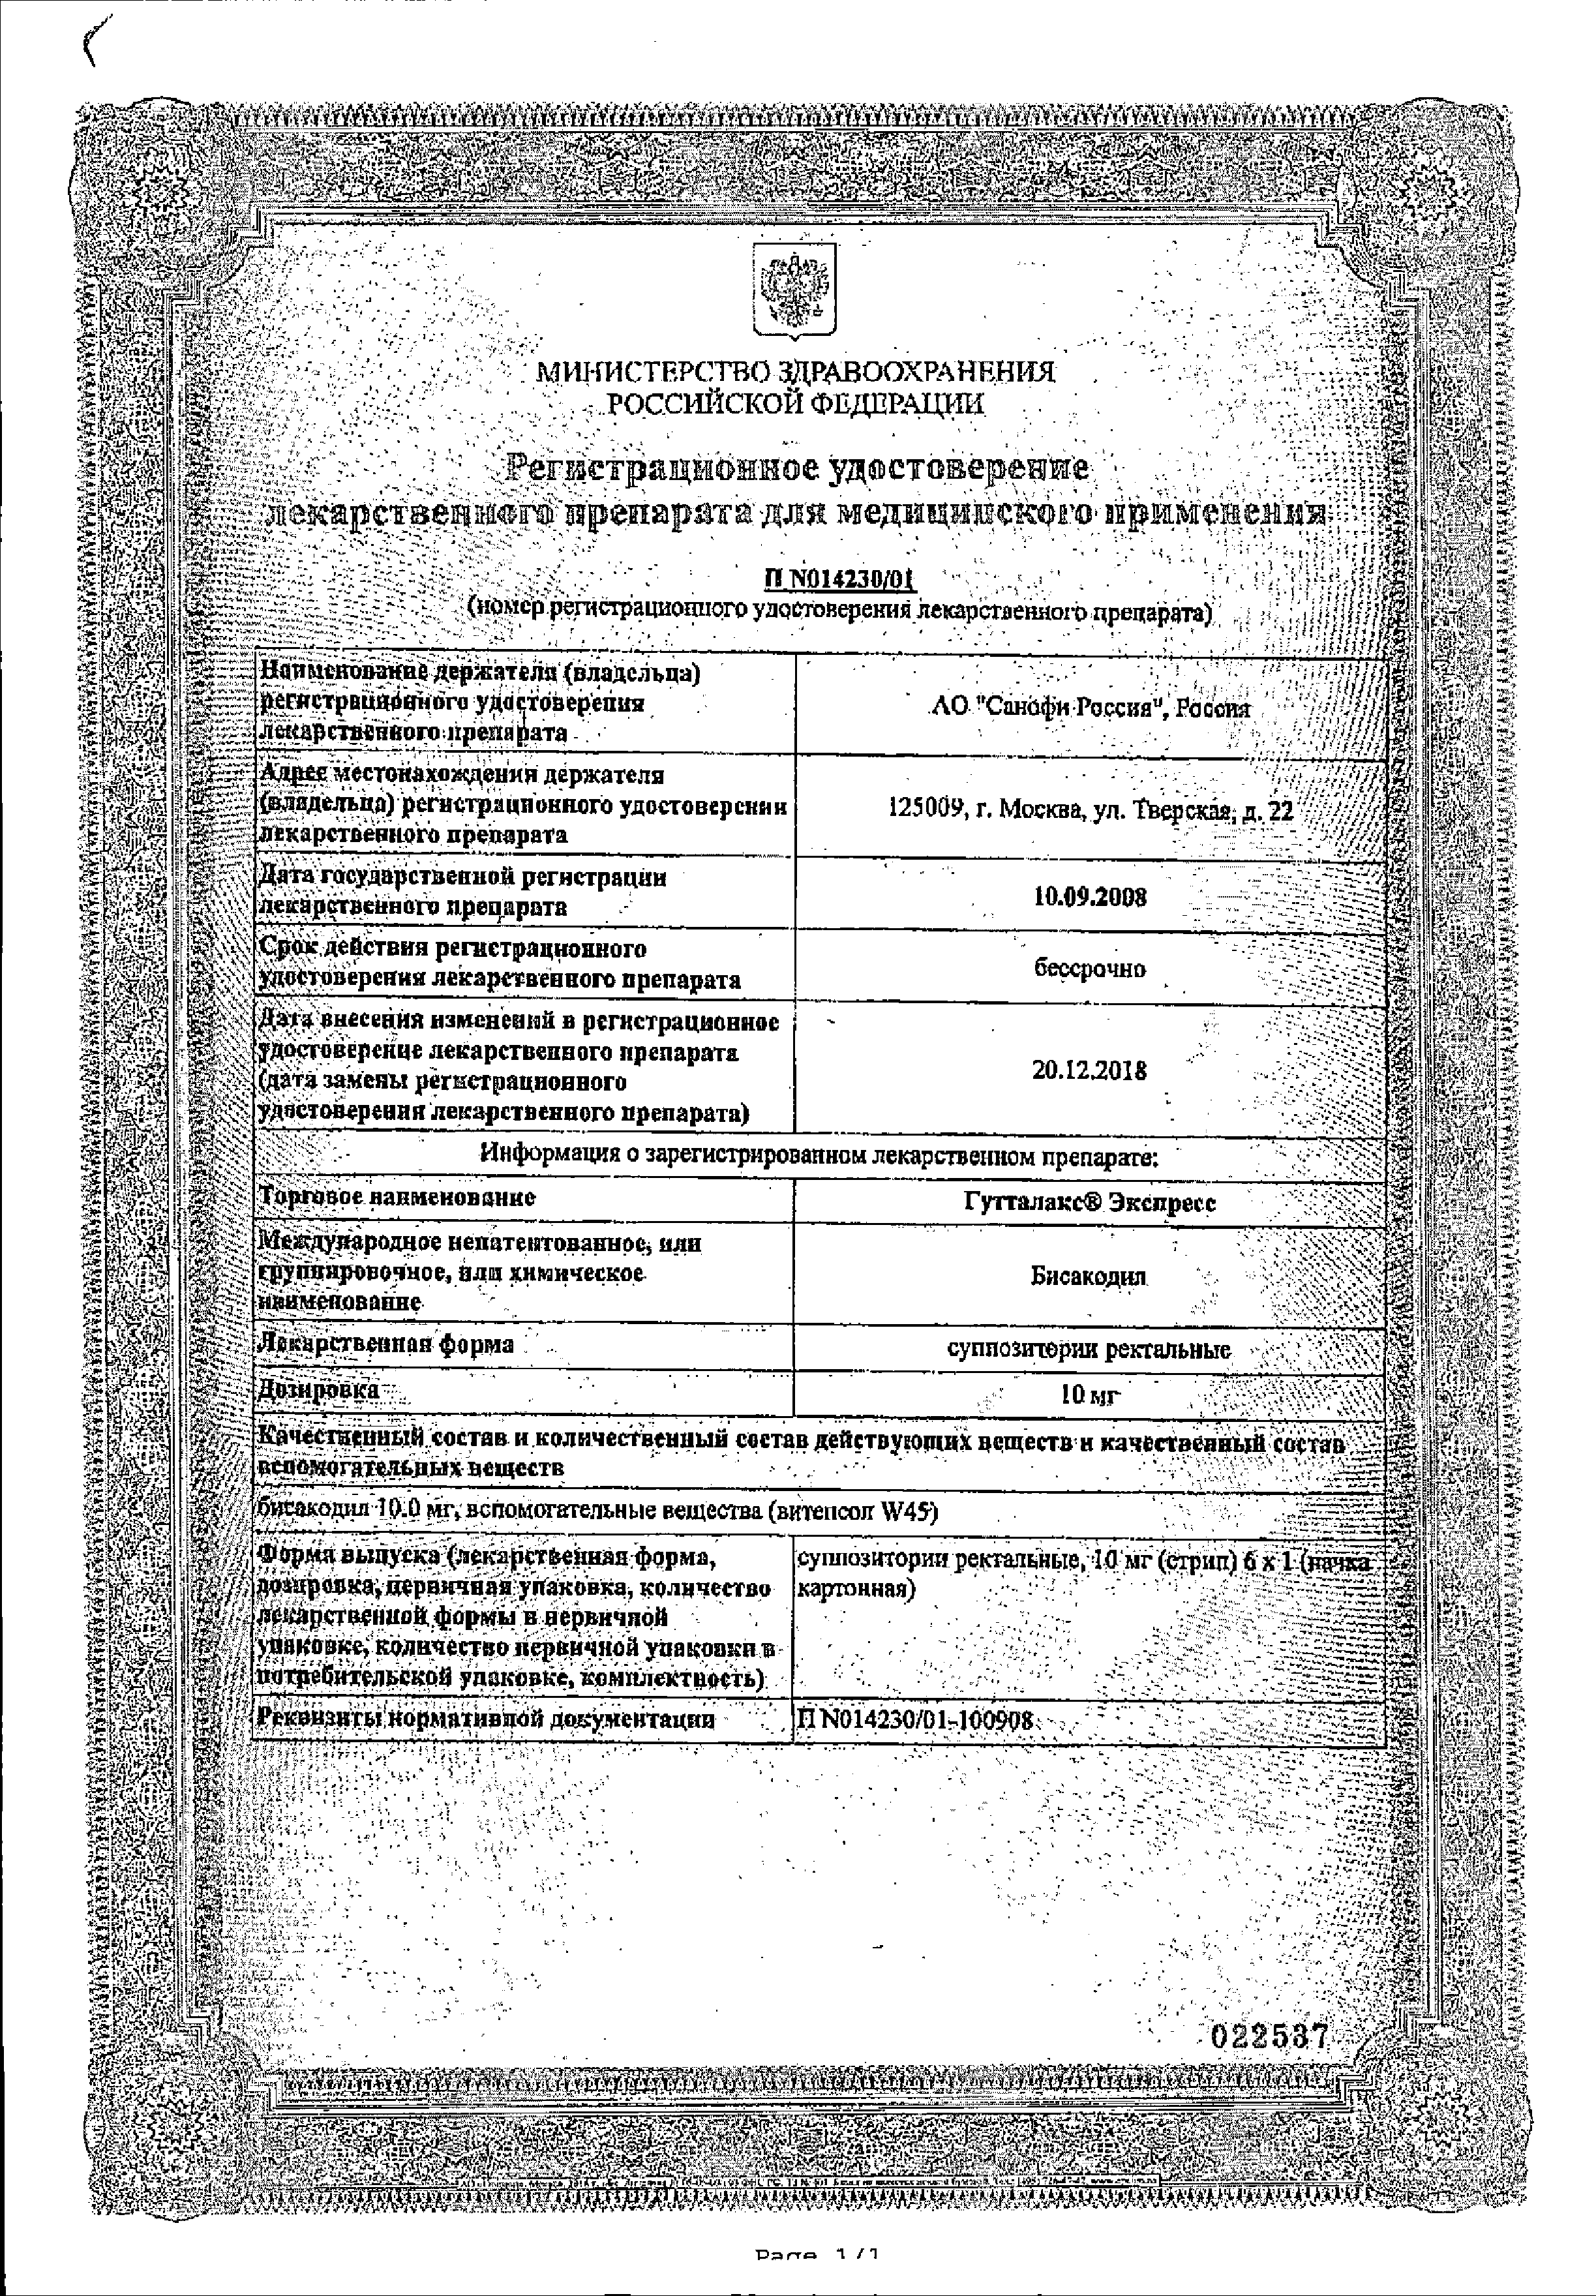 Гутталакс Экспресс сертификат